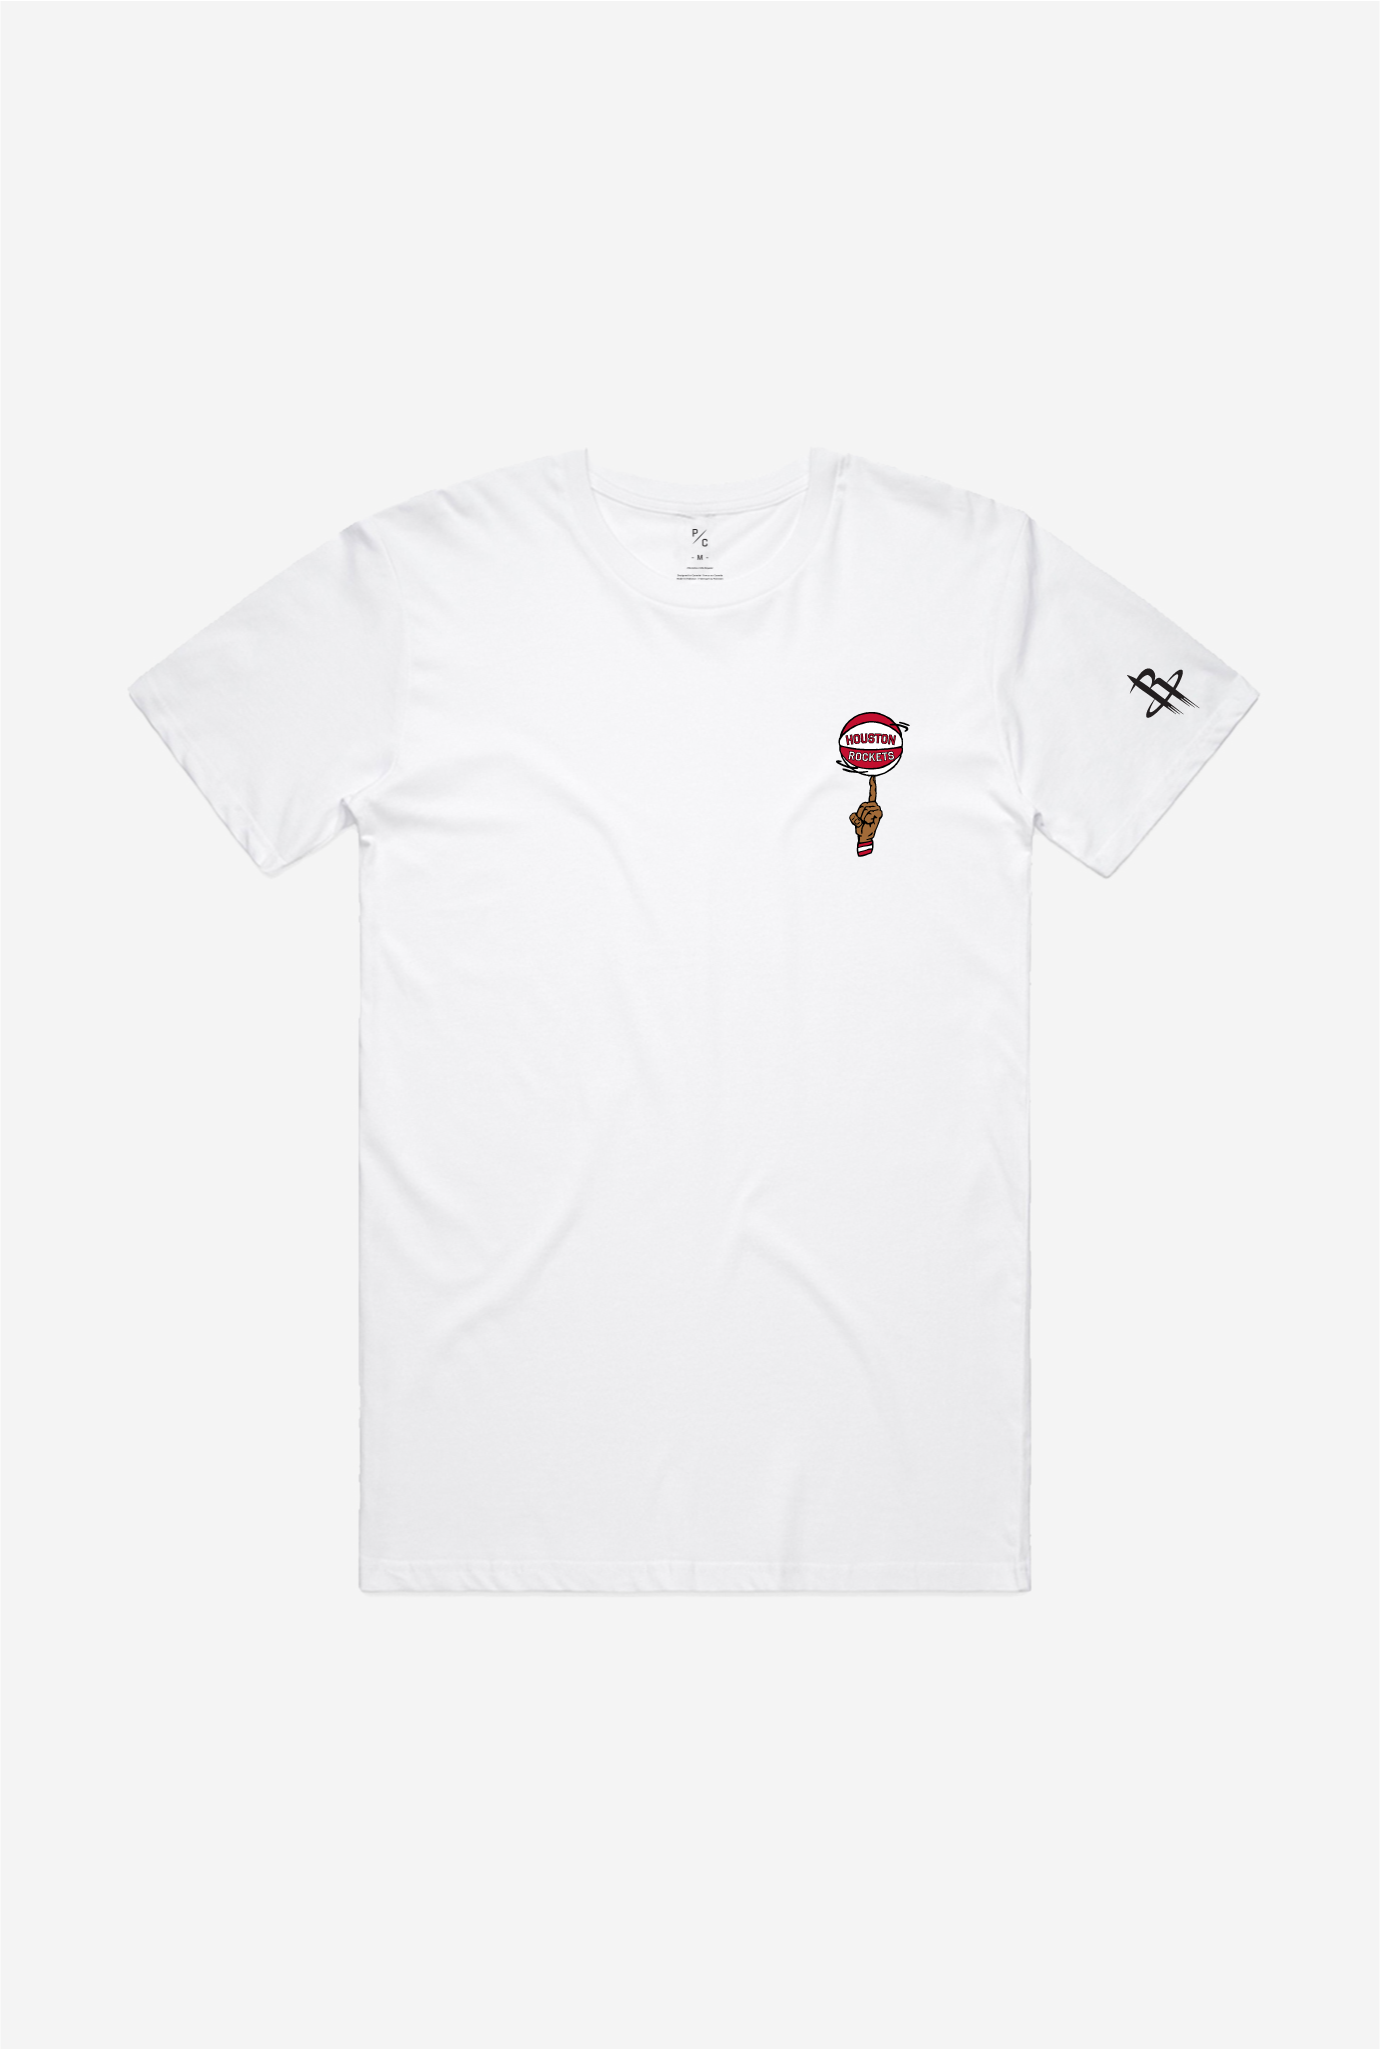 Houston Rockets Spinning Ball T-Shirt - White